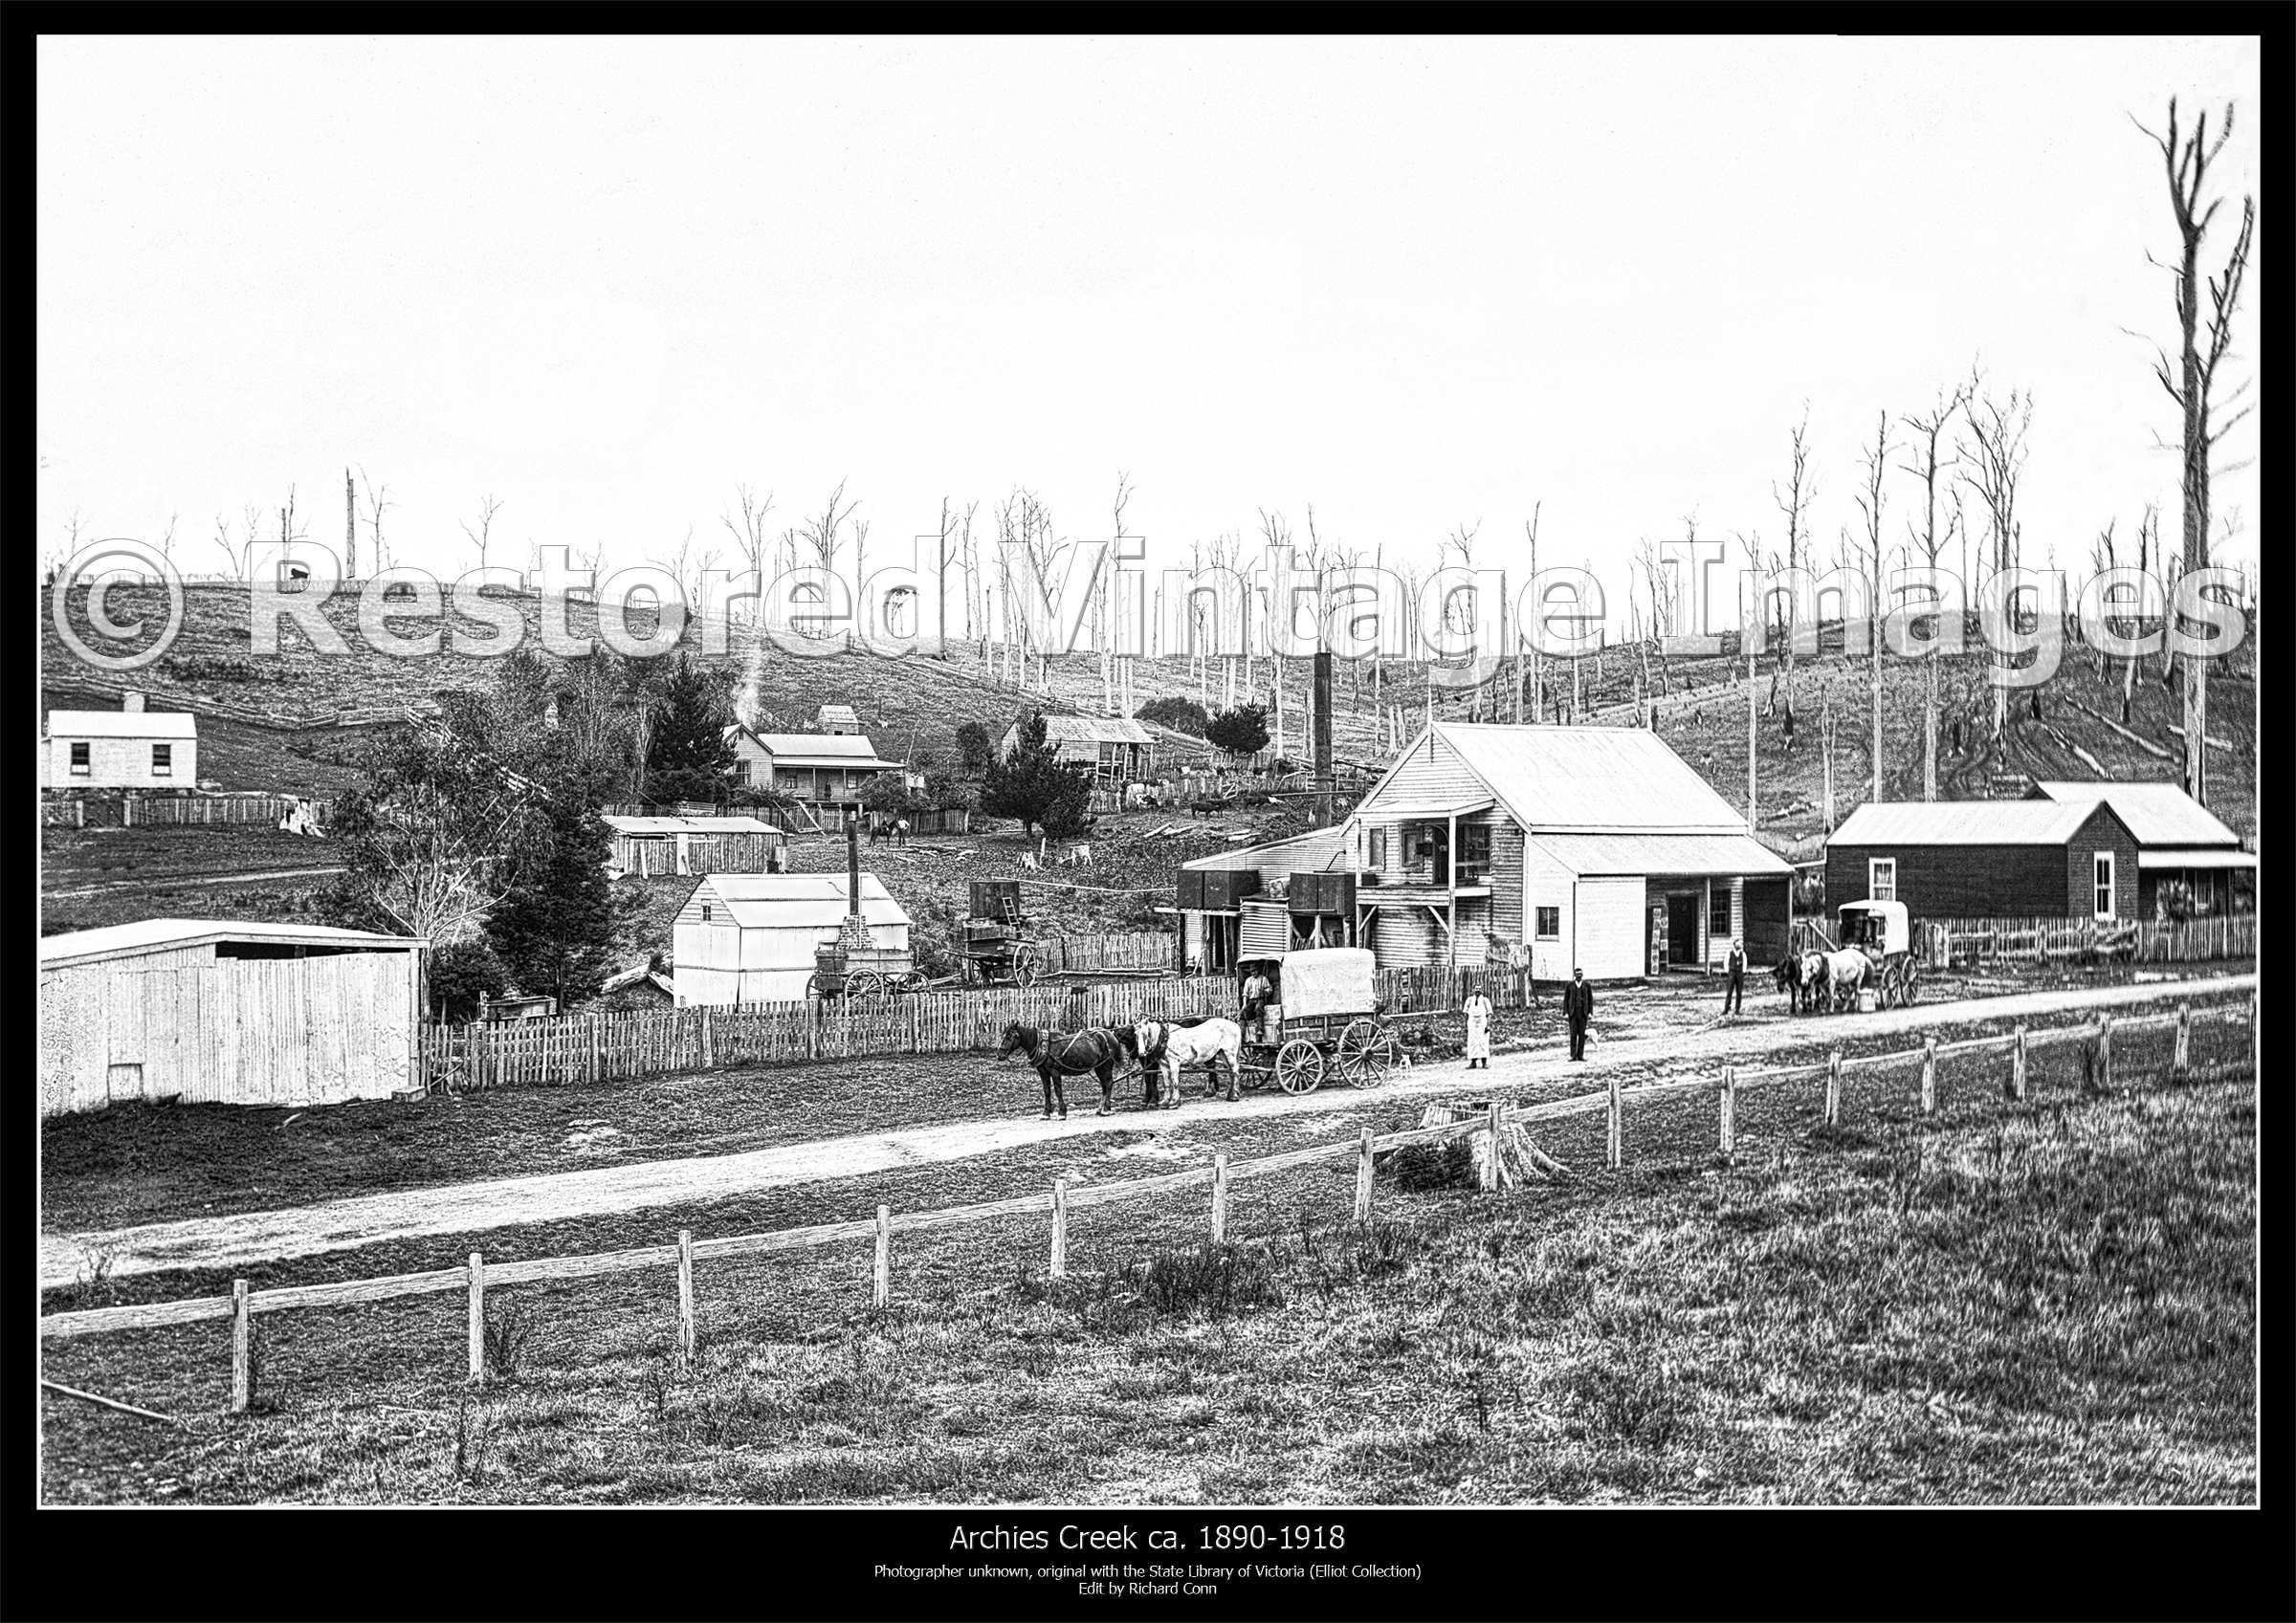 Archies Creek Ca. 1890-1918